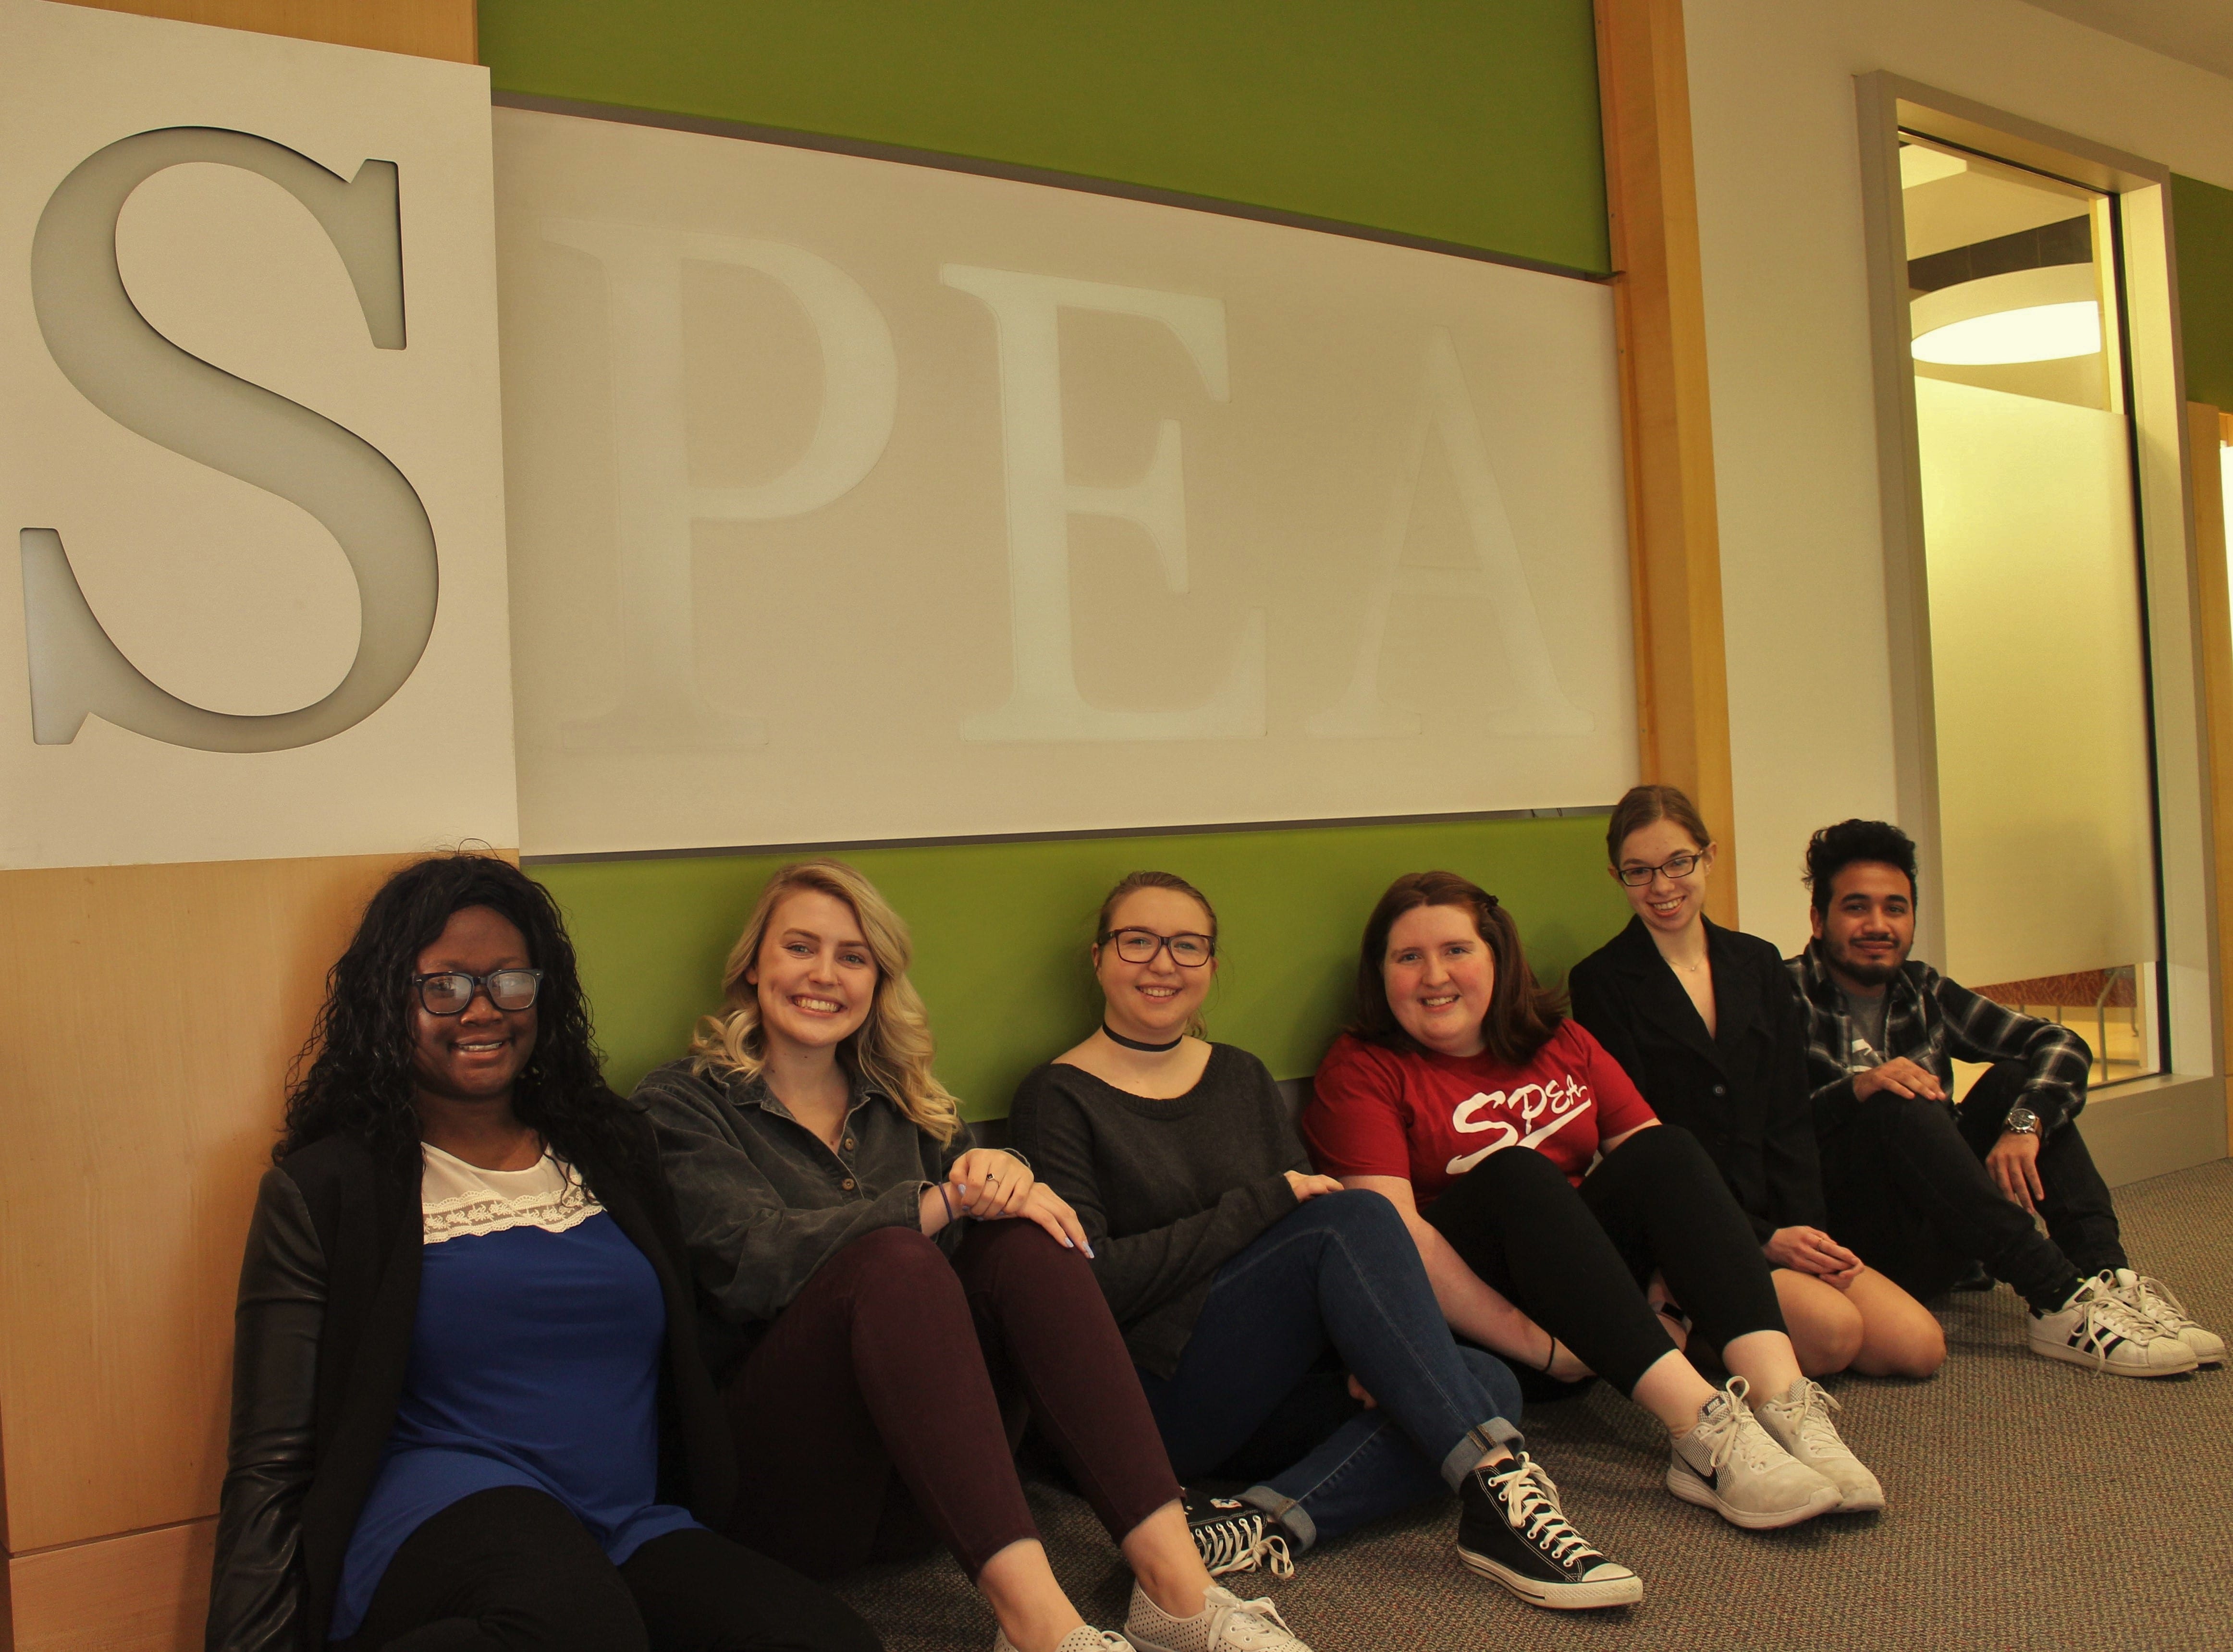 SPEA's team of student employees (L to R) Judith Atibil, Lauren French, Monica Zachary, Katie Boynton, Jen Popiela, and Jessie Silguero.